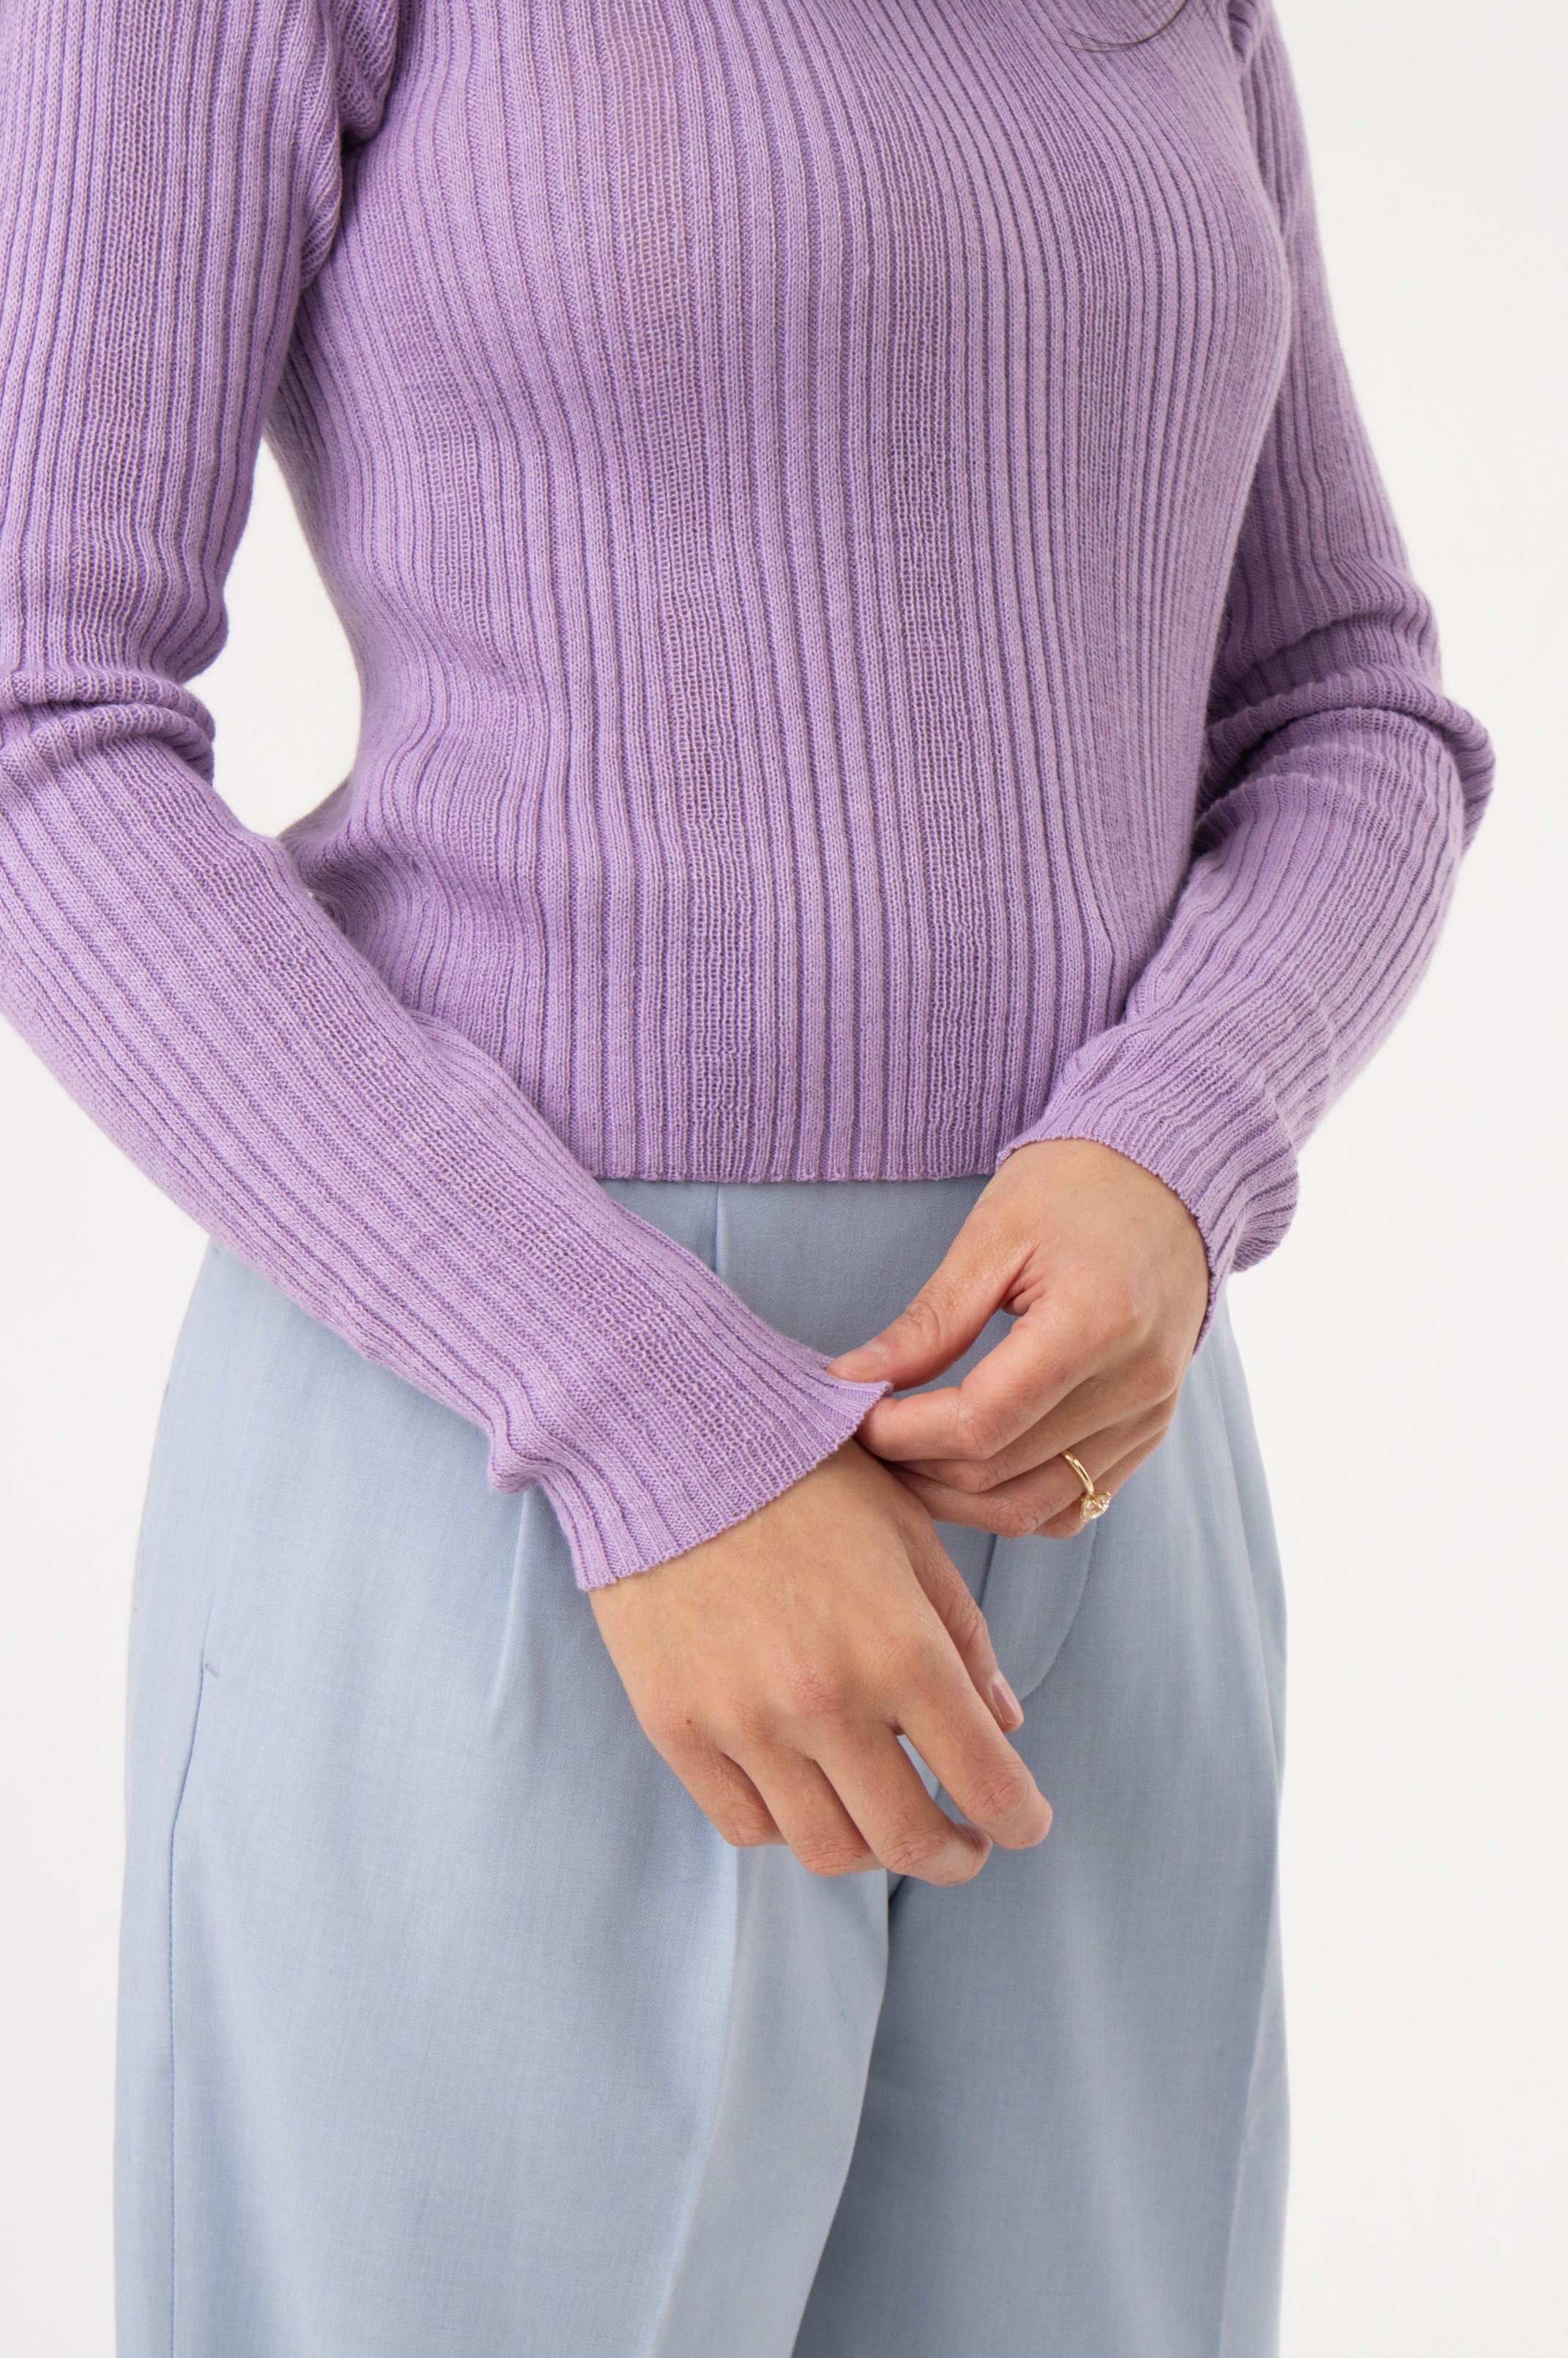 buy natural fibre winter long sleeve top melbourne#colour_lilac